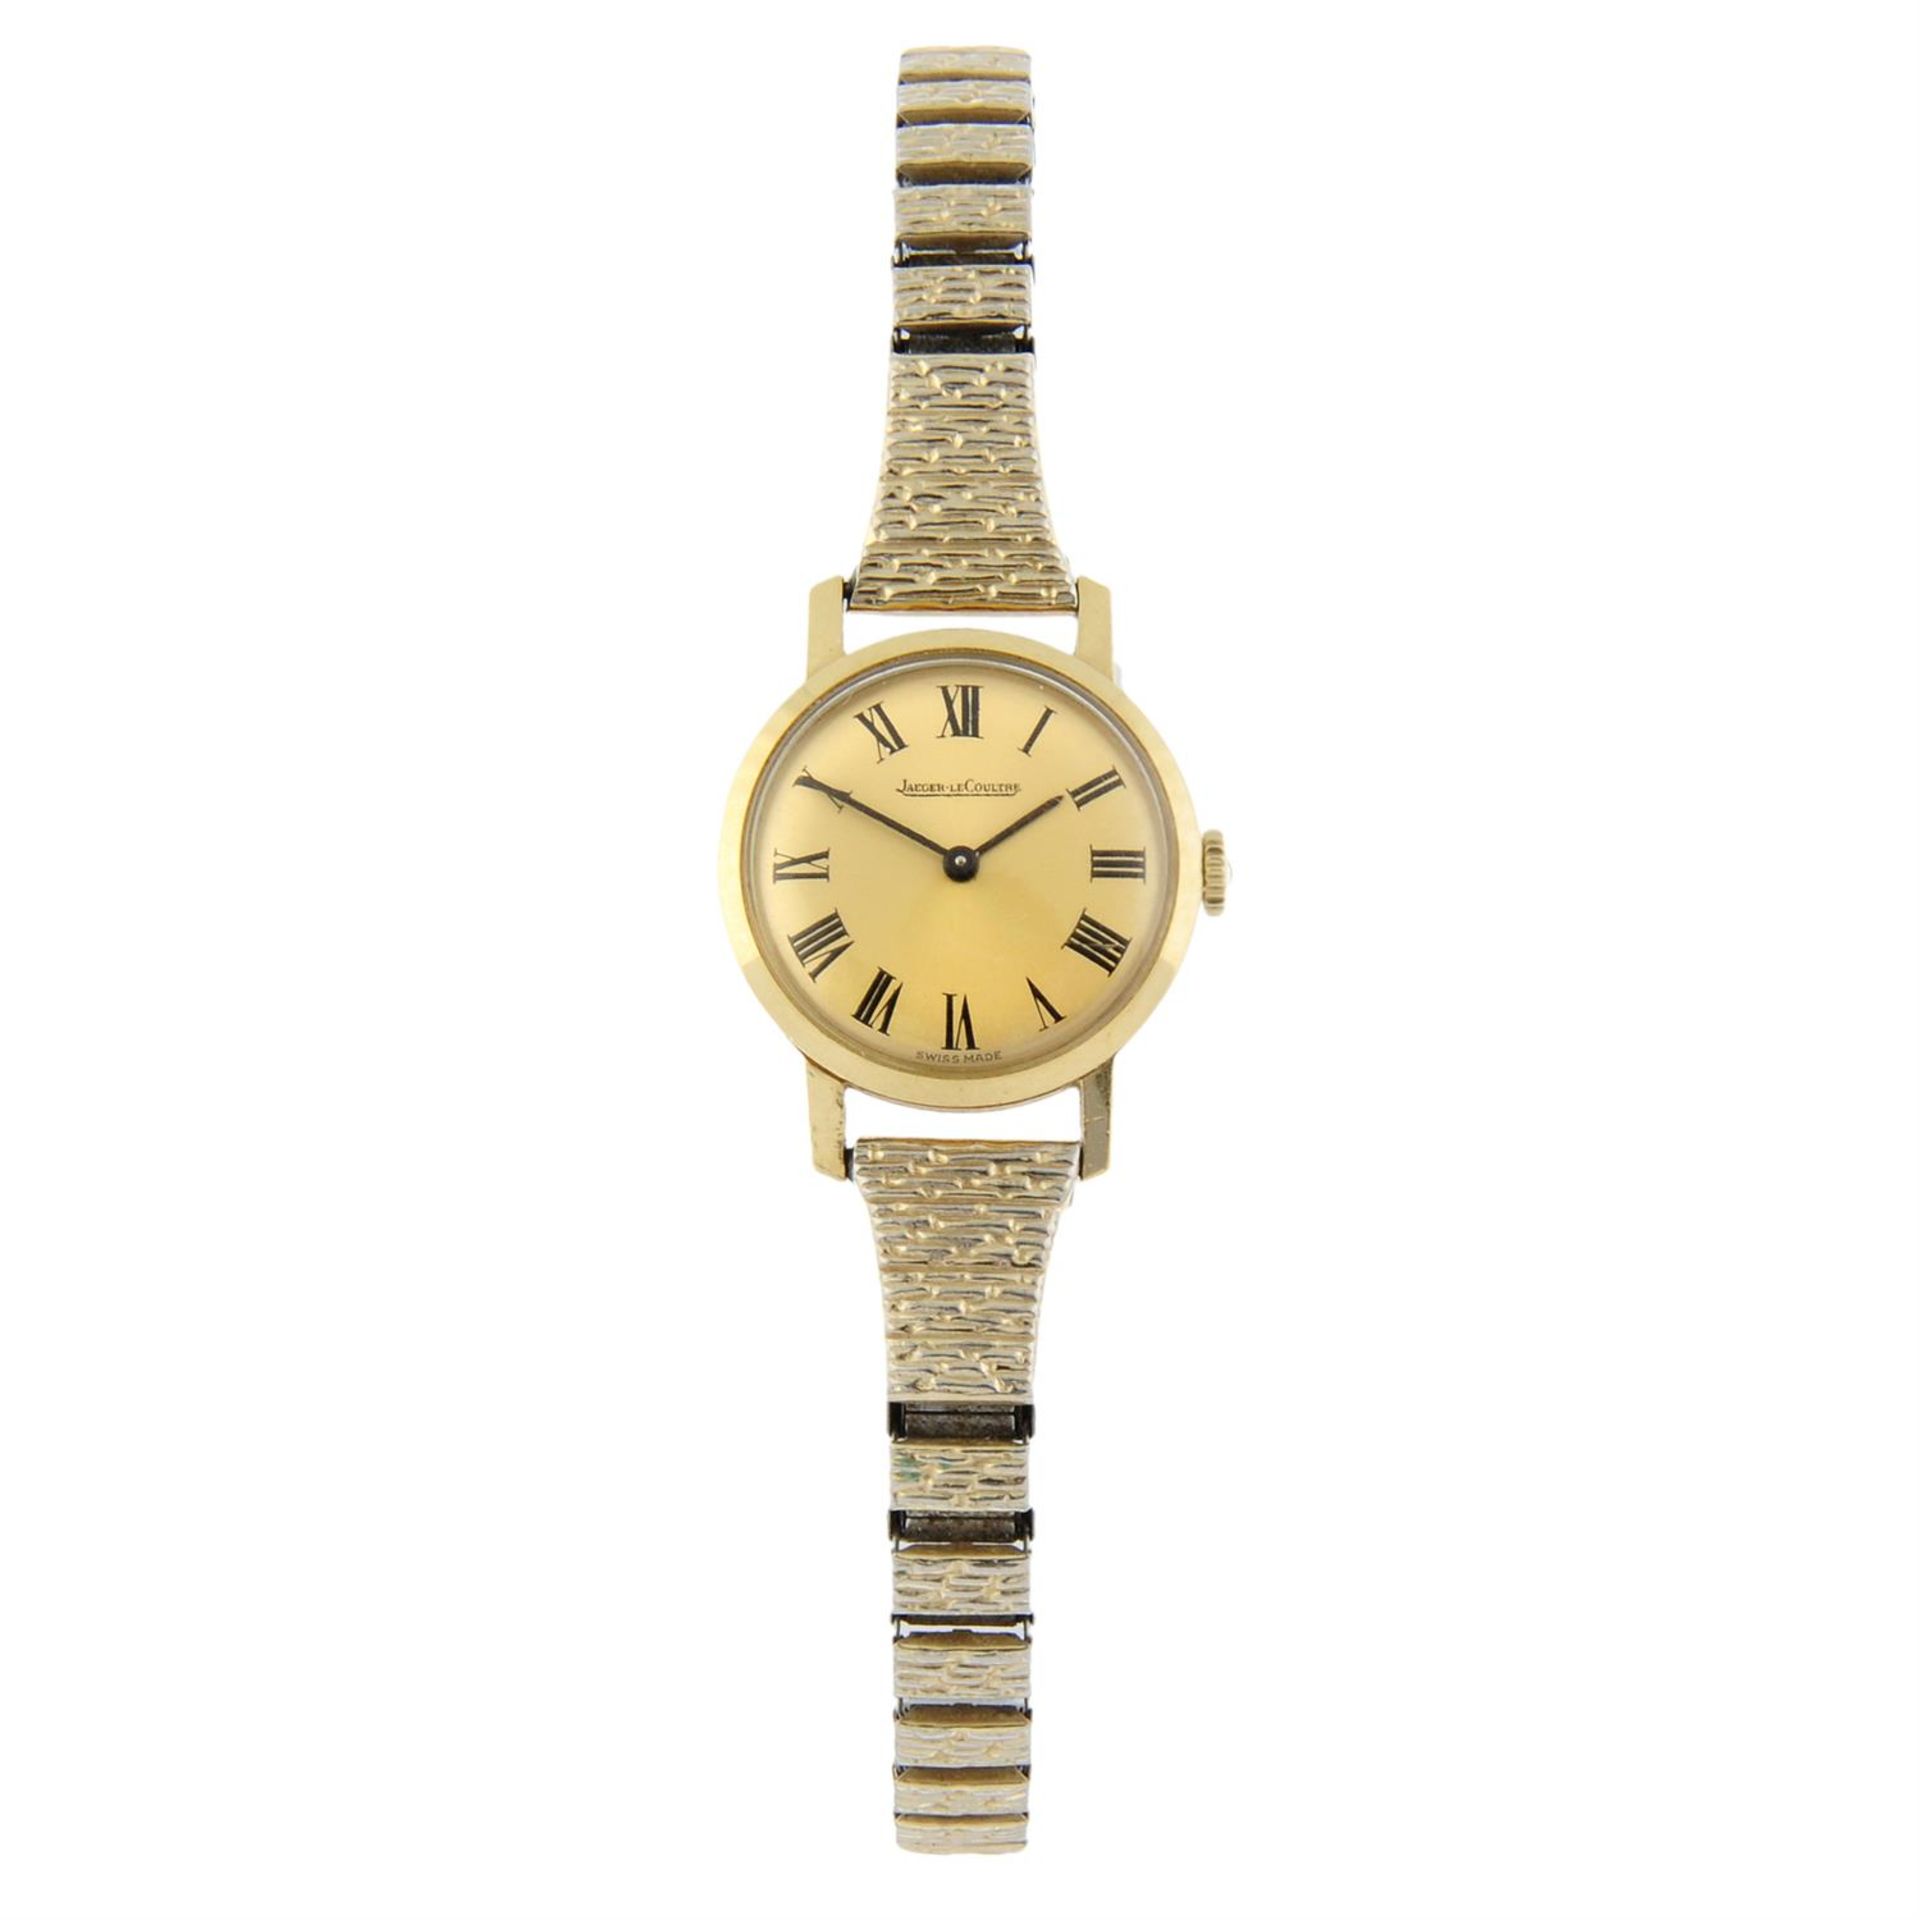 JAEGER-LECOULTRE - a yellow metal bracelet watch, 20mm.